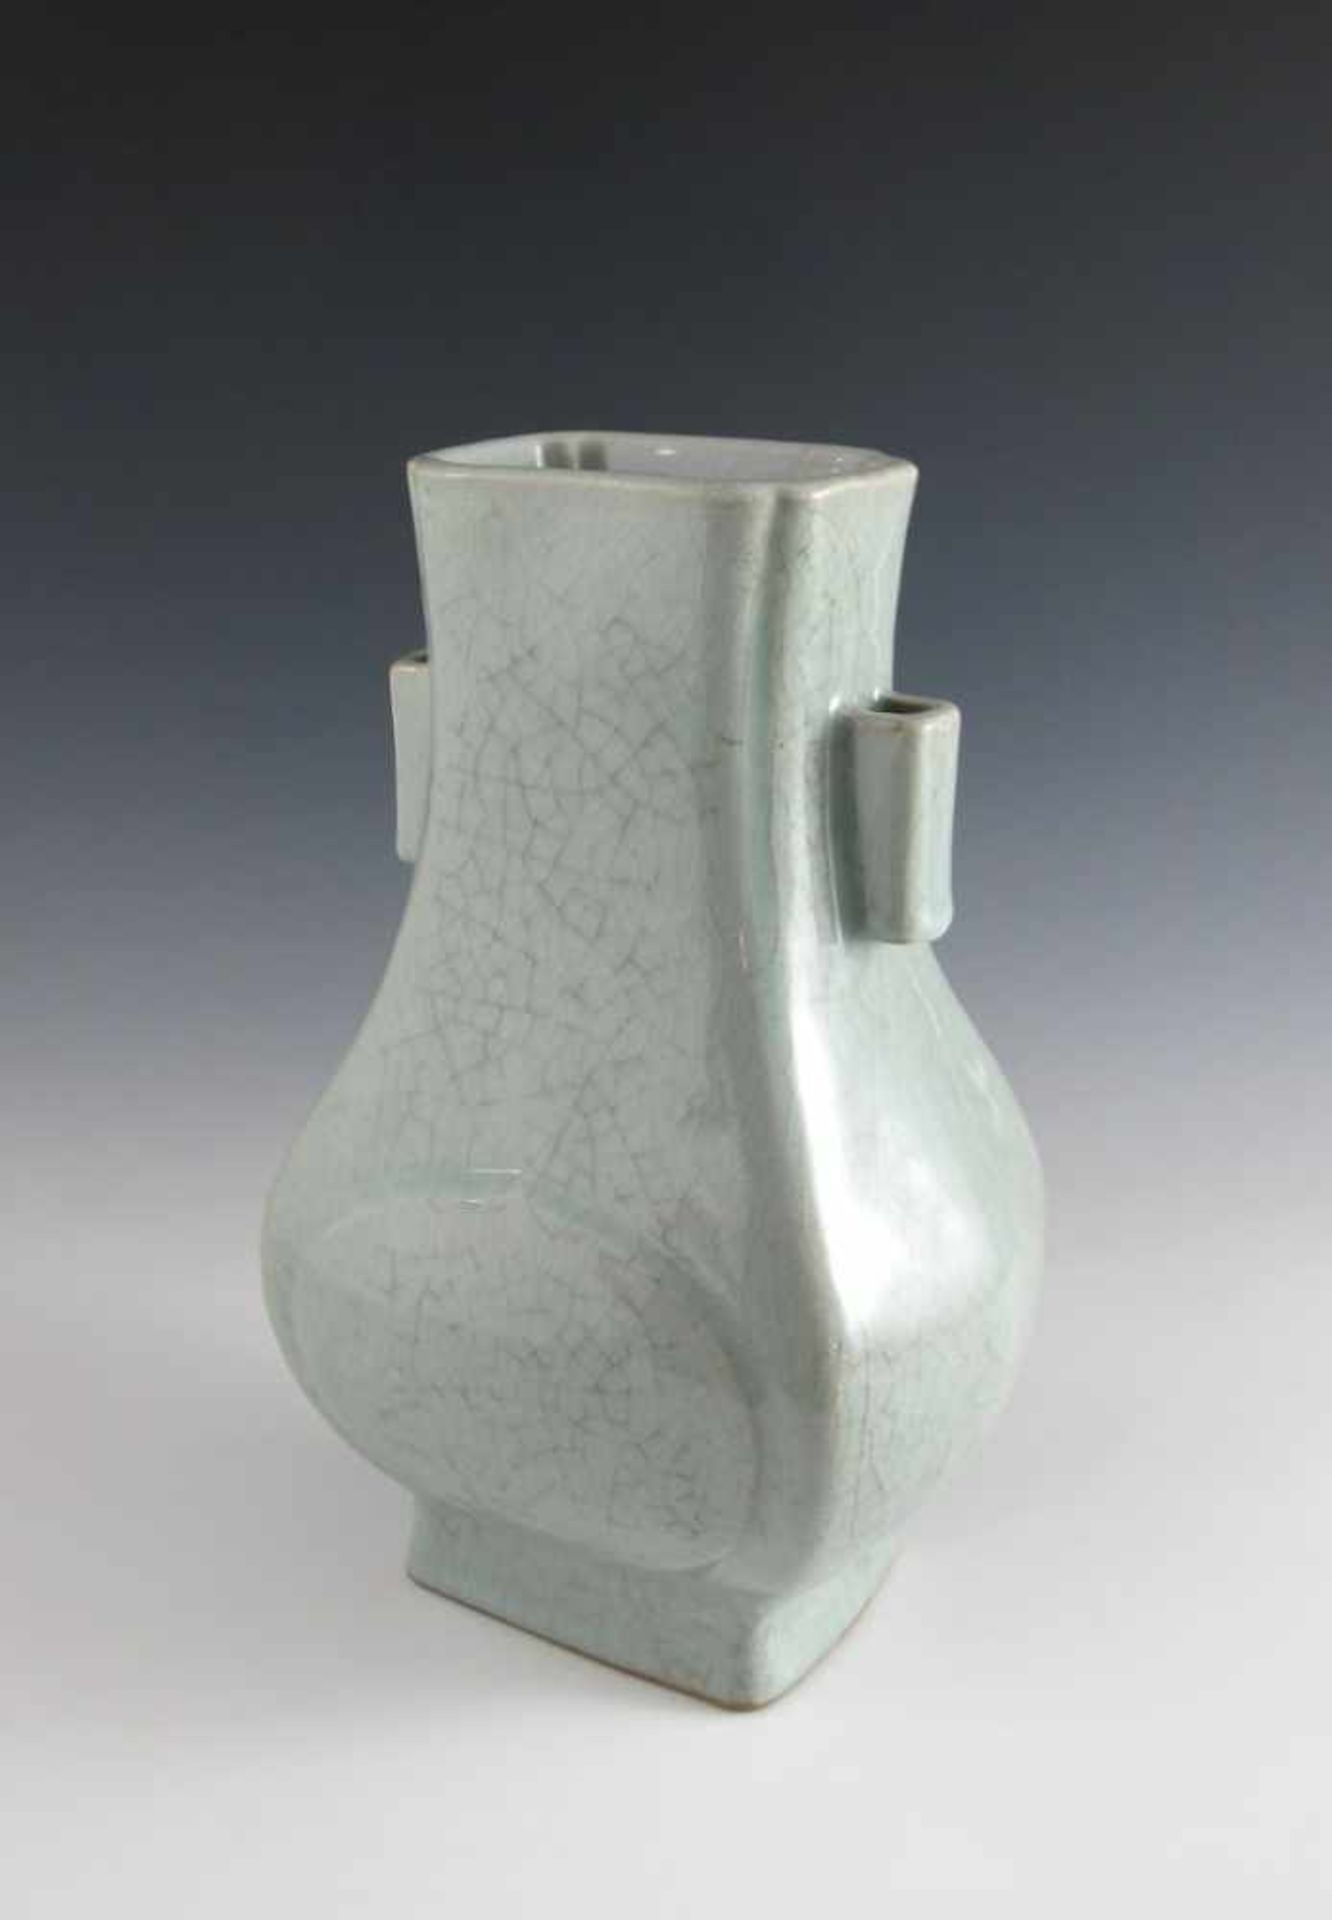 Vase vom Typ Hu. Seladonglasur mit Krakelee. Bodenmarke mit sechs Charakteren, Guangxu Nianzhi.